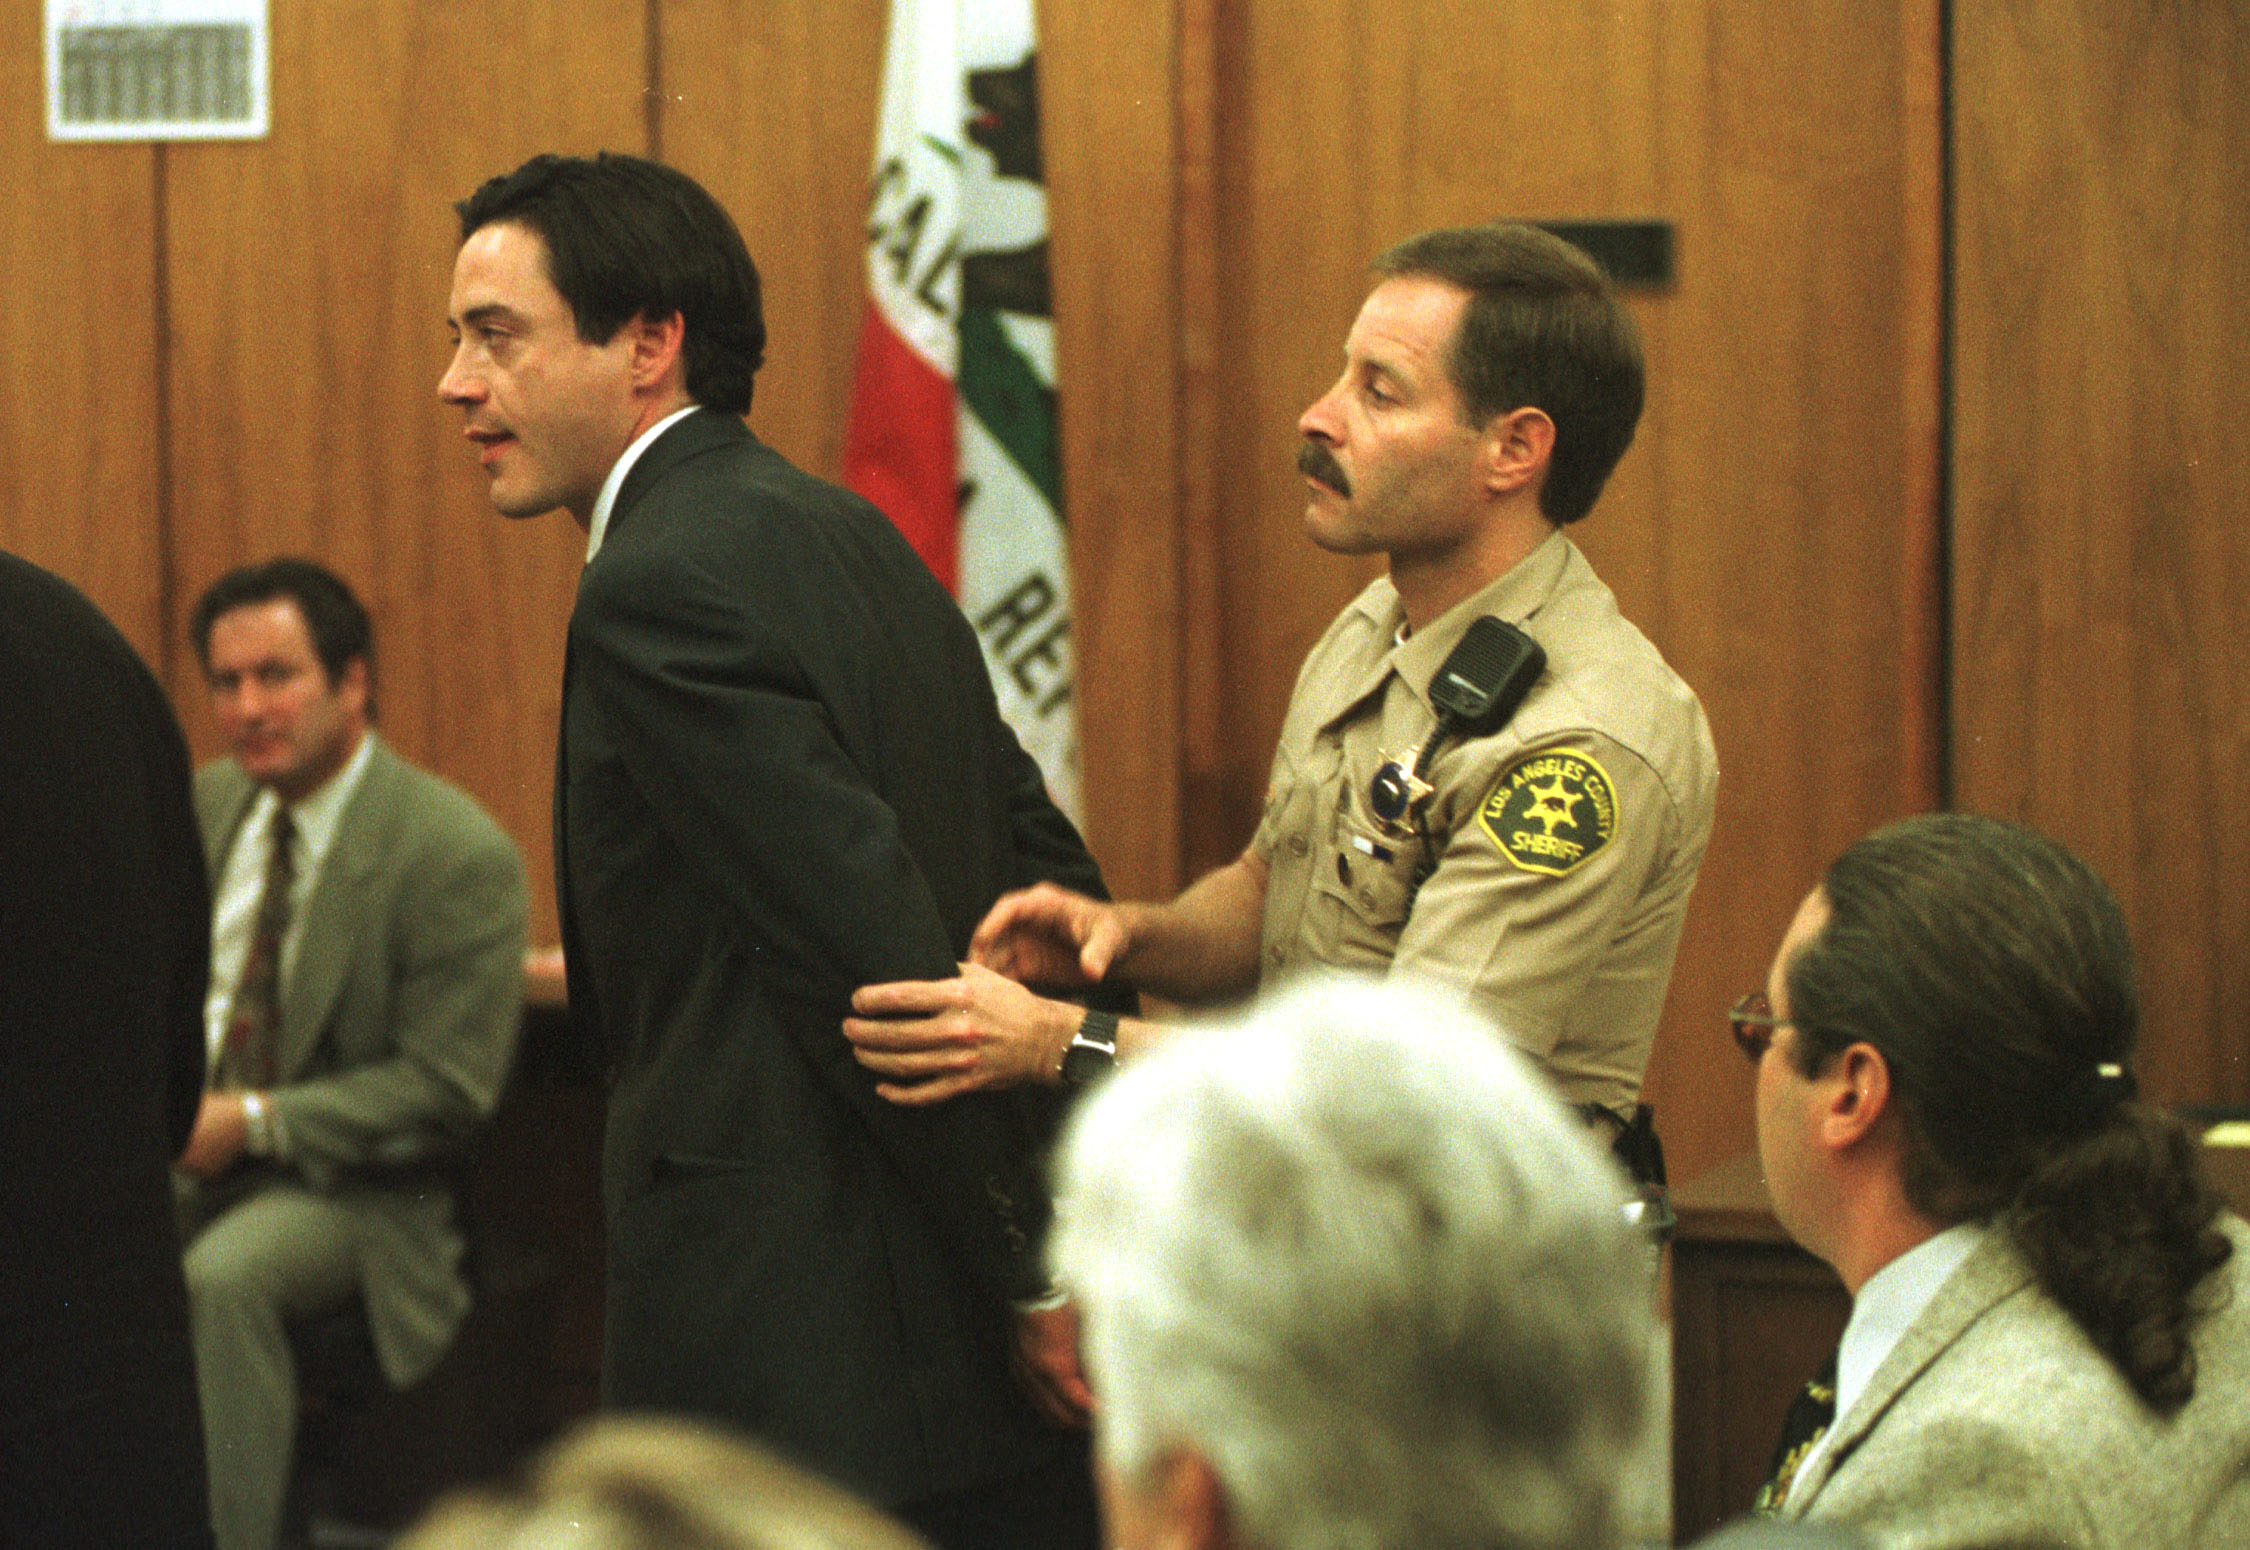 Robert Downey Jr. am 8. Dezember 1997 in Malibu, Kalifornien. | Quelle: Getty Images